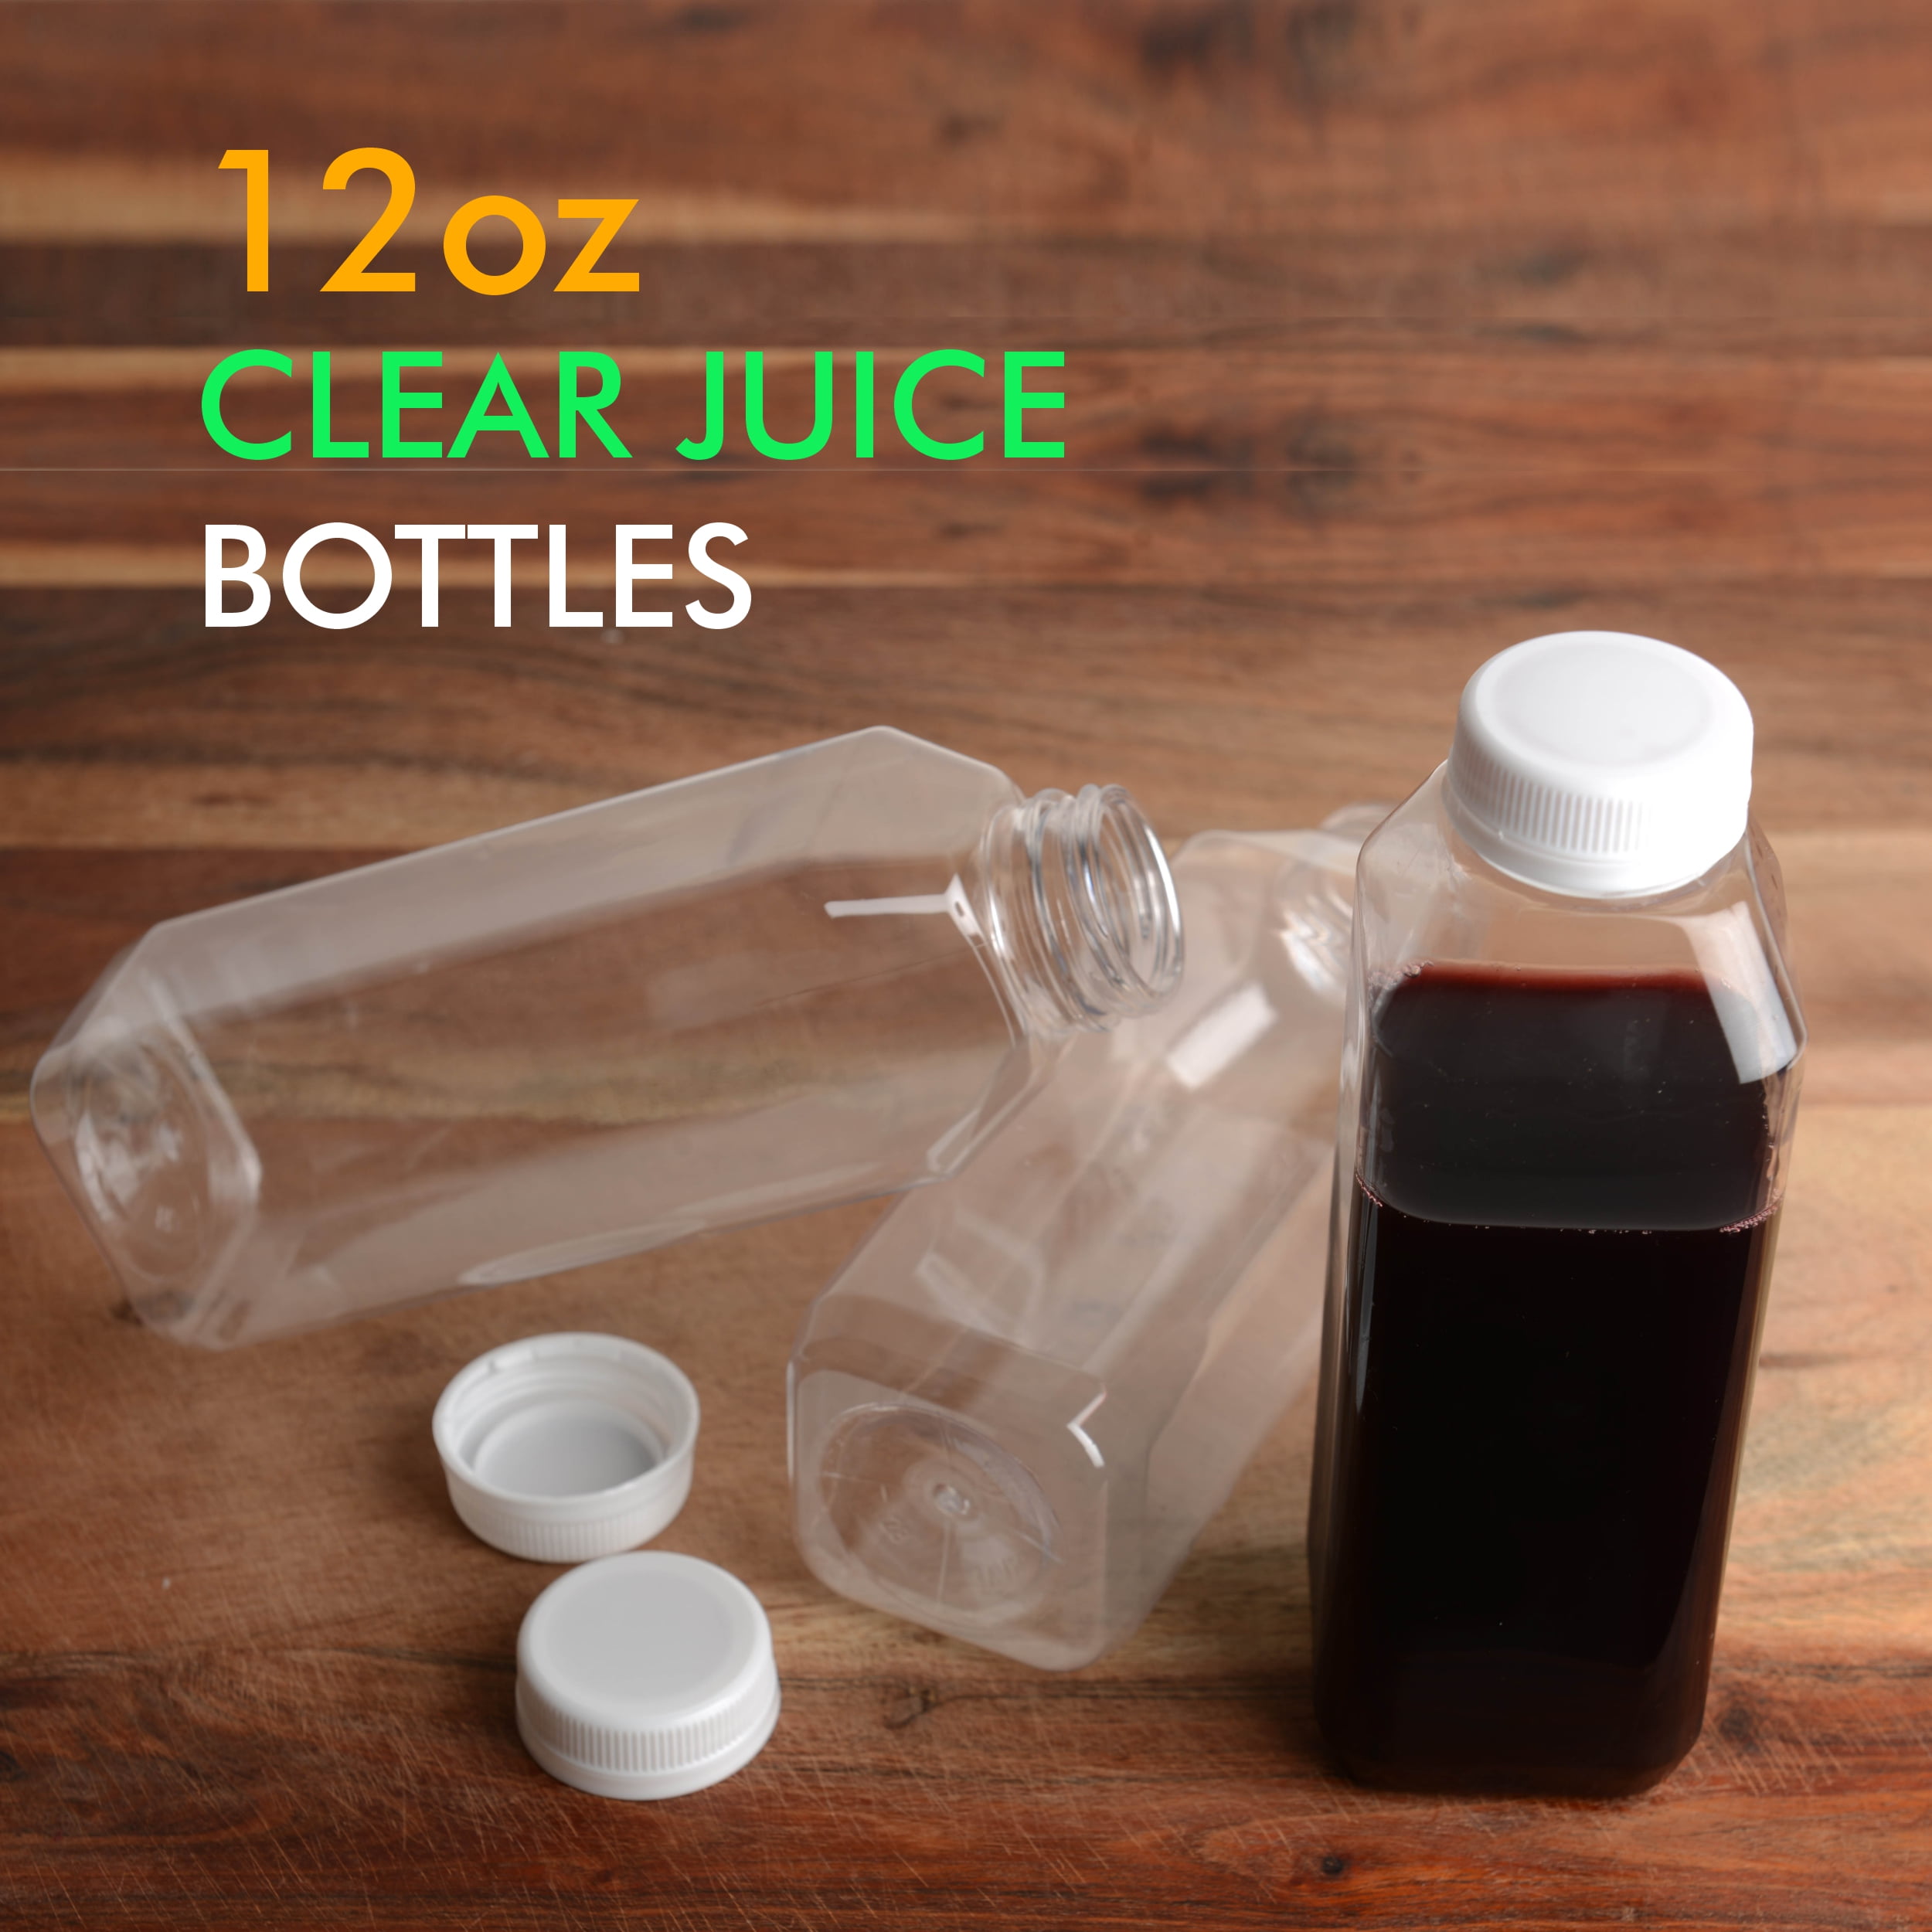 TOMNK 45pcs 12oz Plastic Juice Bottles with Caps Empty Reusable Clear  Bottles with Label, Funnel and…See more TOMNK 45pcs 12oz Plastic Juice  Bottles